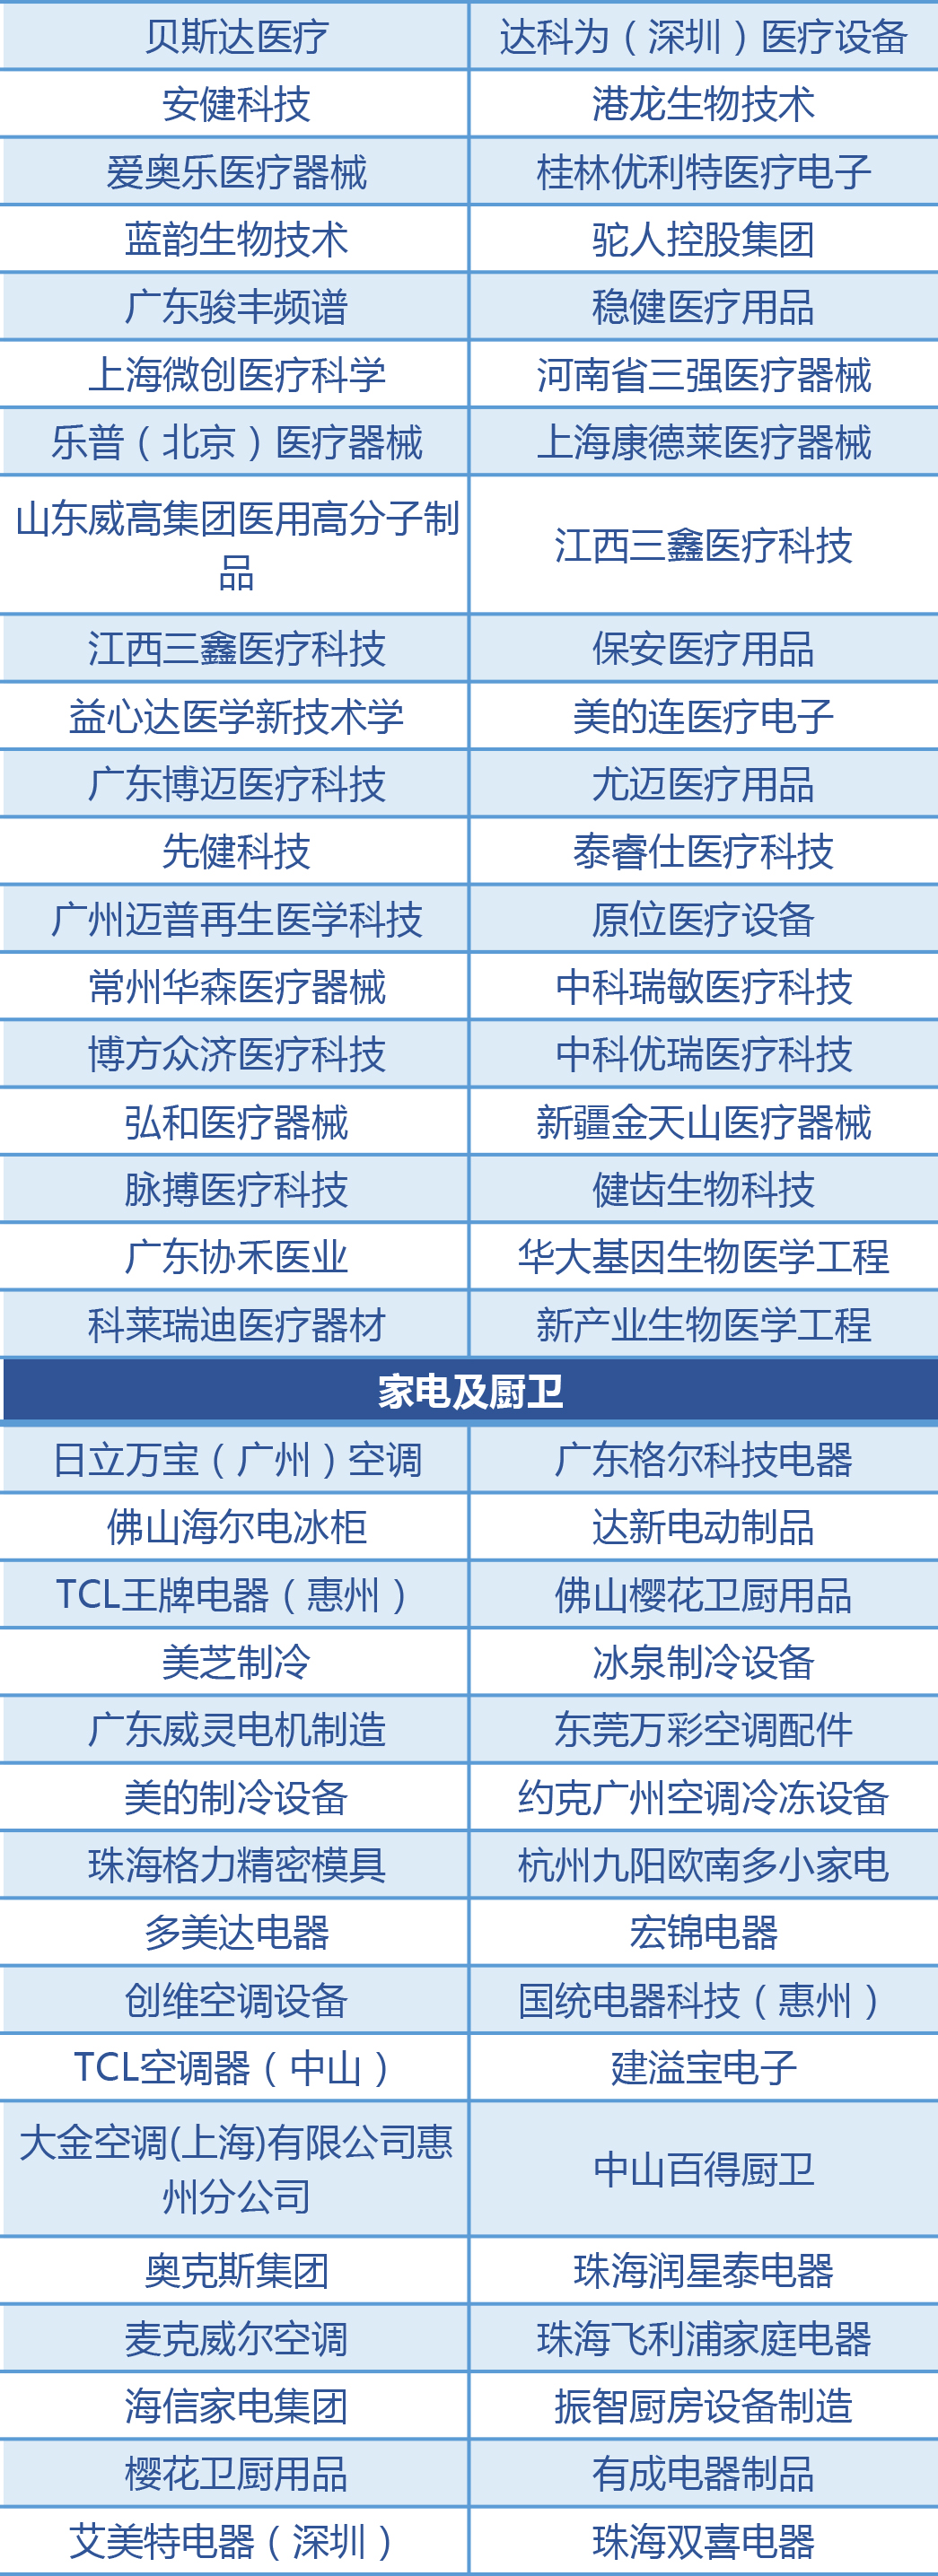 2022ITES深圳工业展观众3.jpg